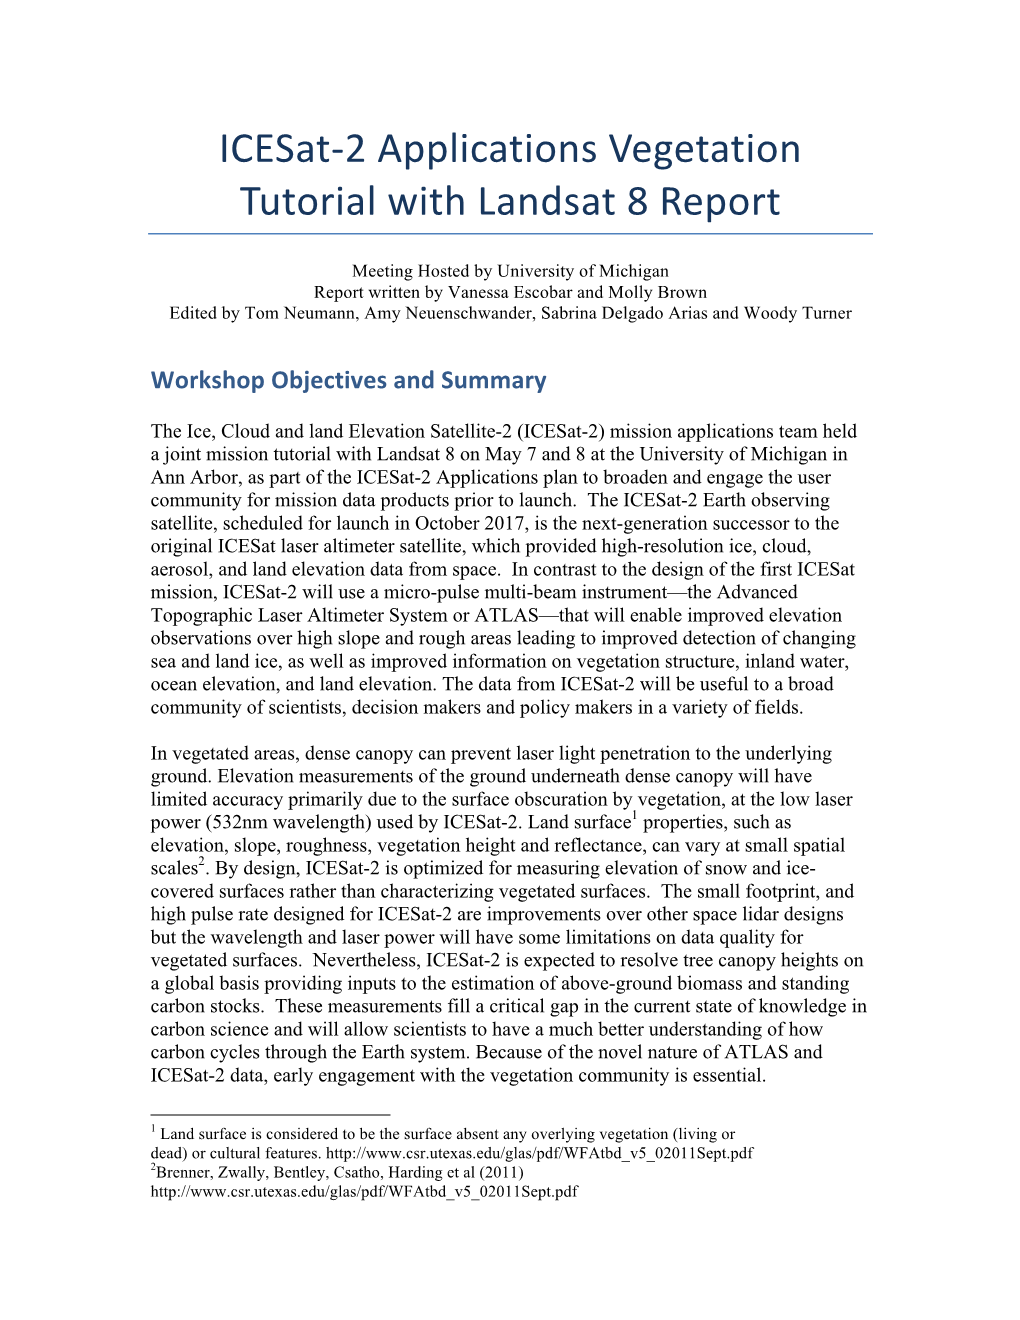 Icesat-2 Applications Vegetation Tutorial with Landsat 8 Report